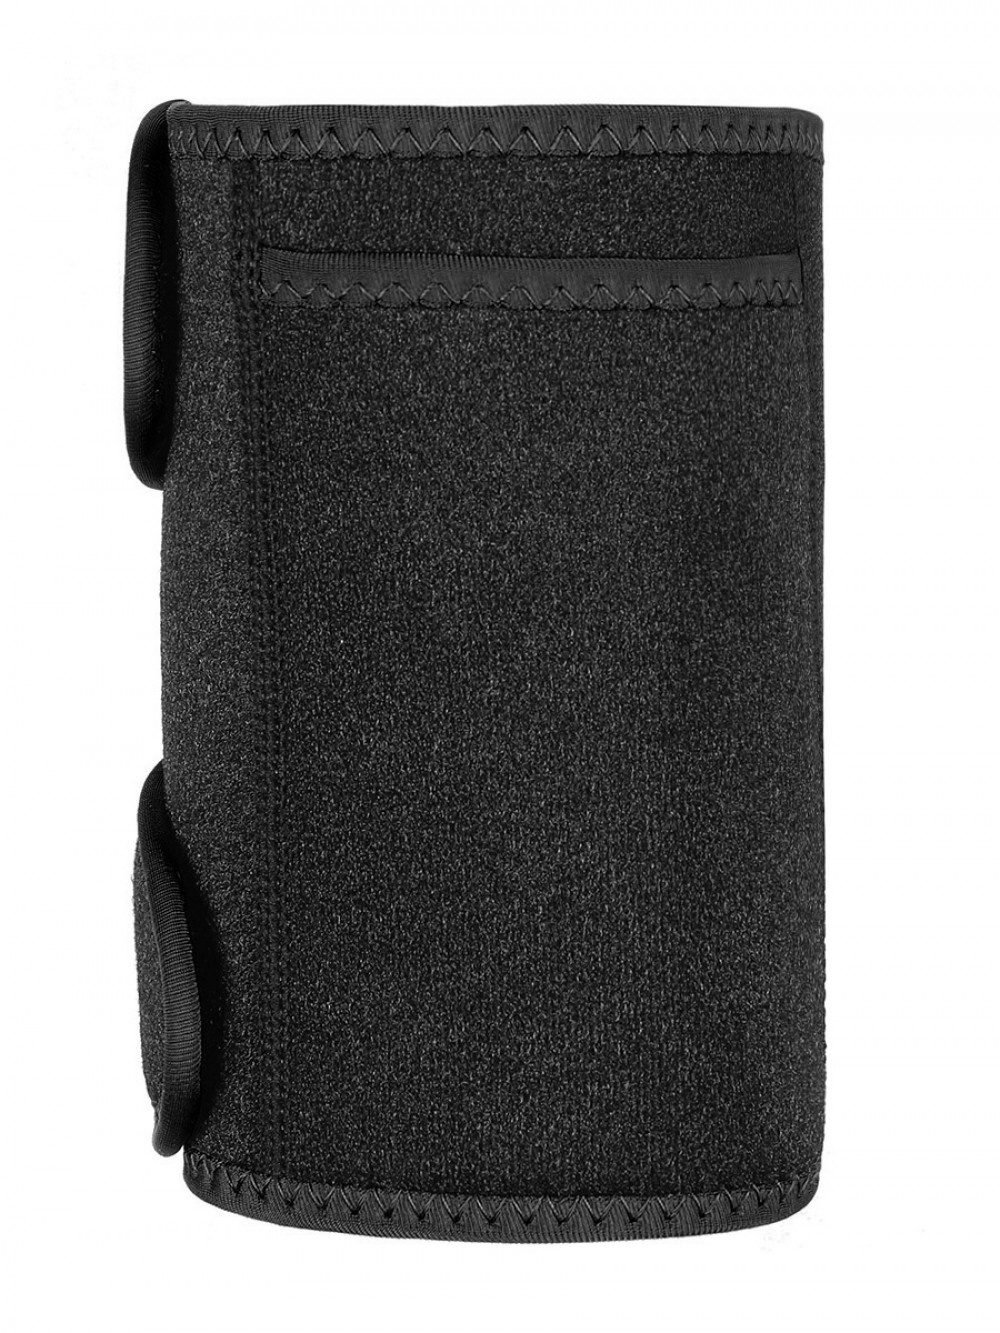 Black 2 Pieces Repel Neoprene Arm Shaper High Quality